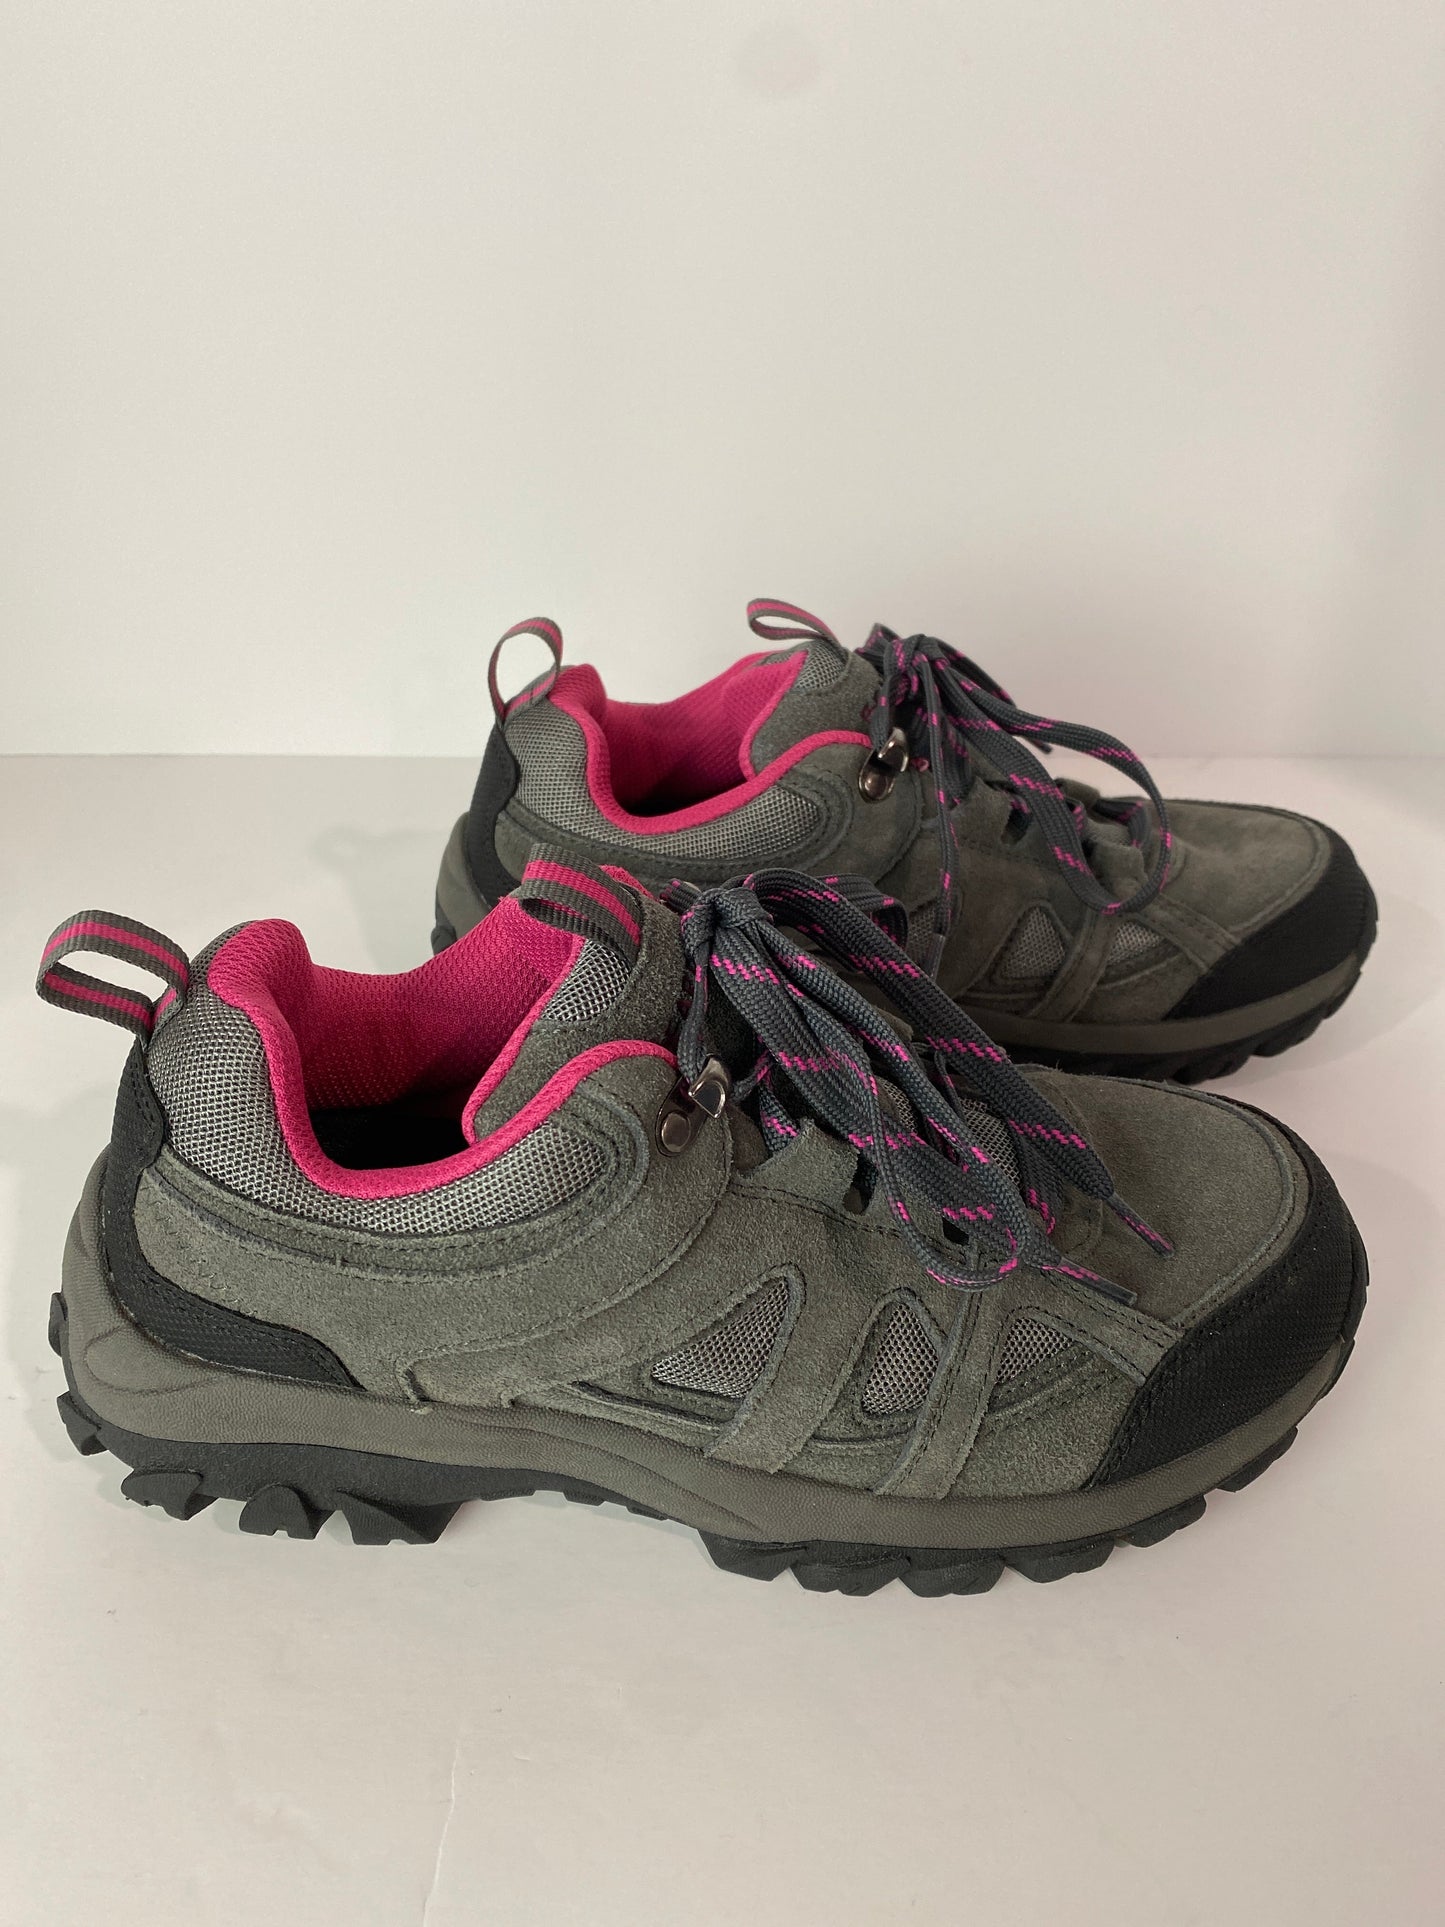 Grey Boots Hiking Bearpaw, Size 6